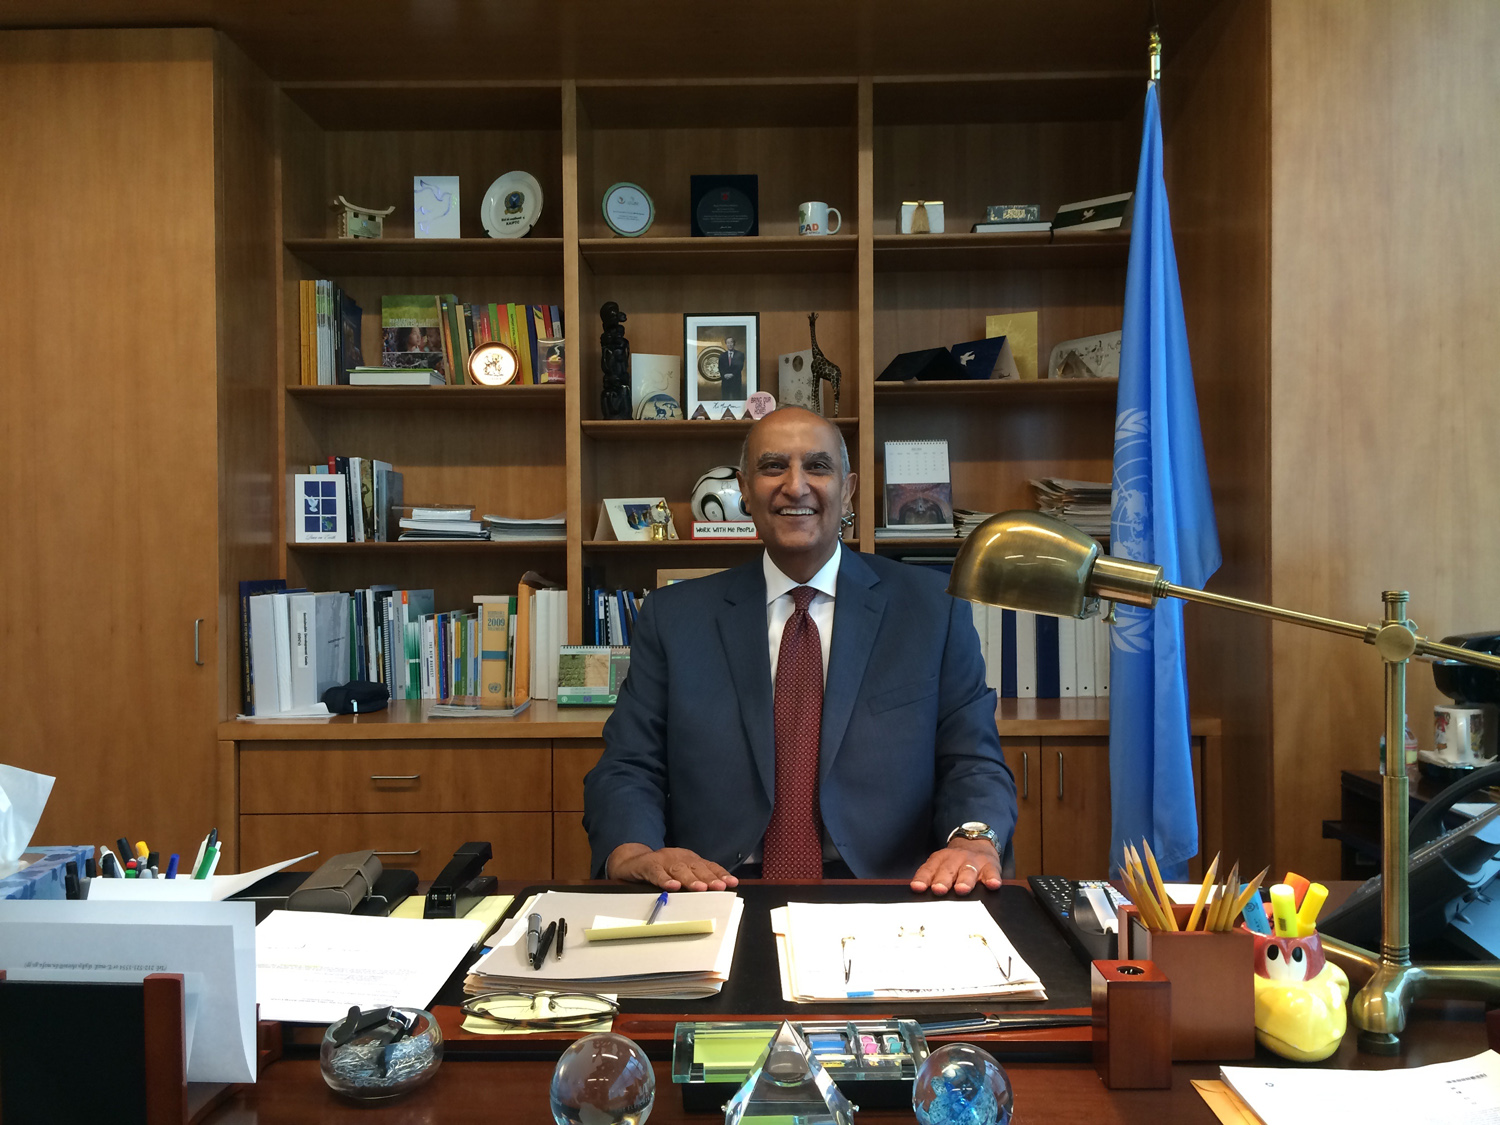 UN Secretary General's Special Adviser on Africa Majed Abdulaziz